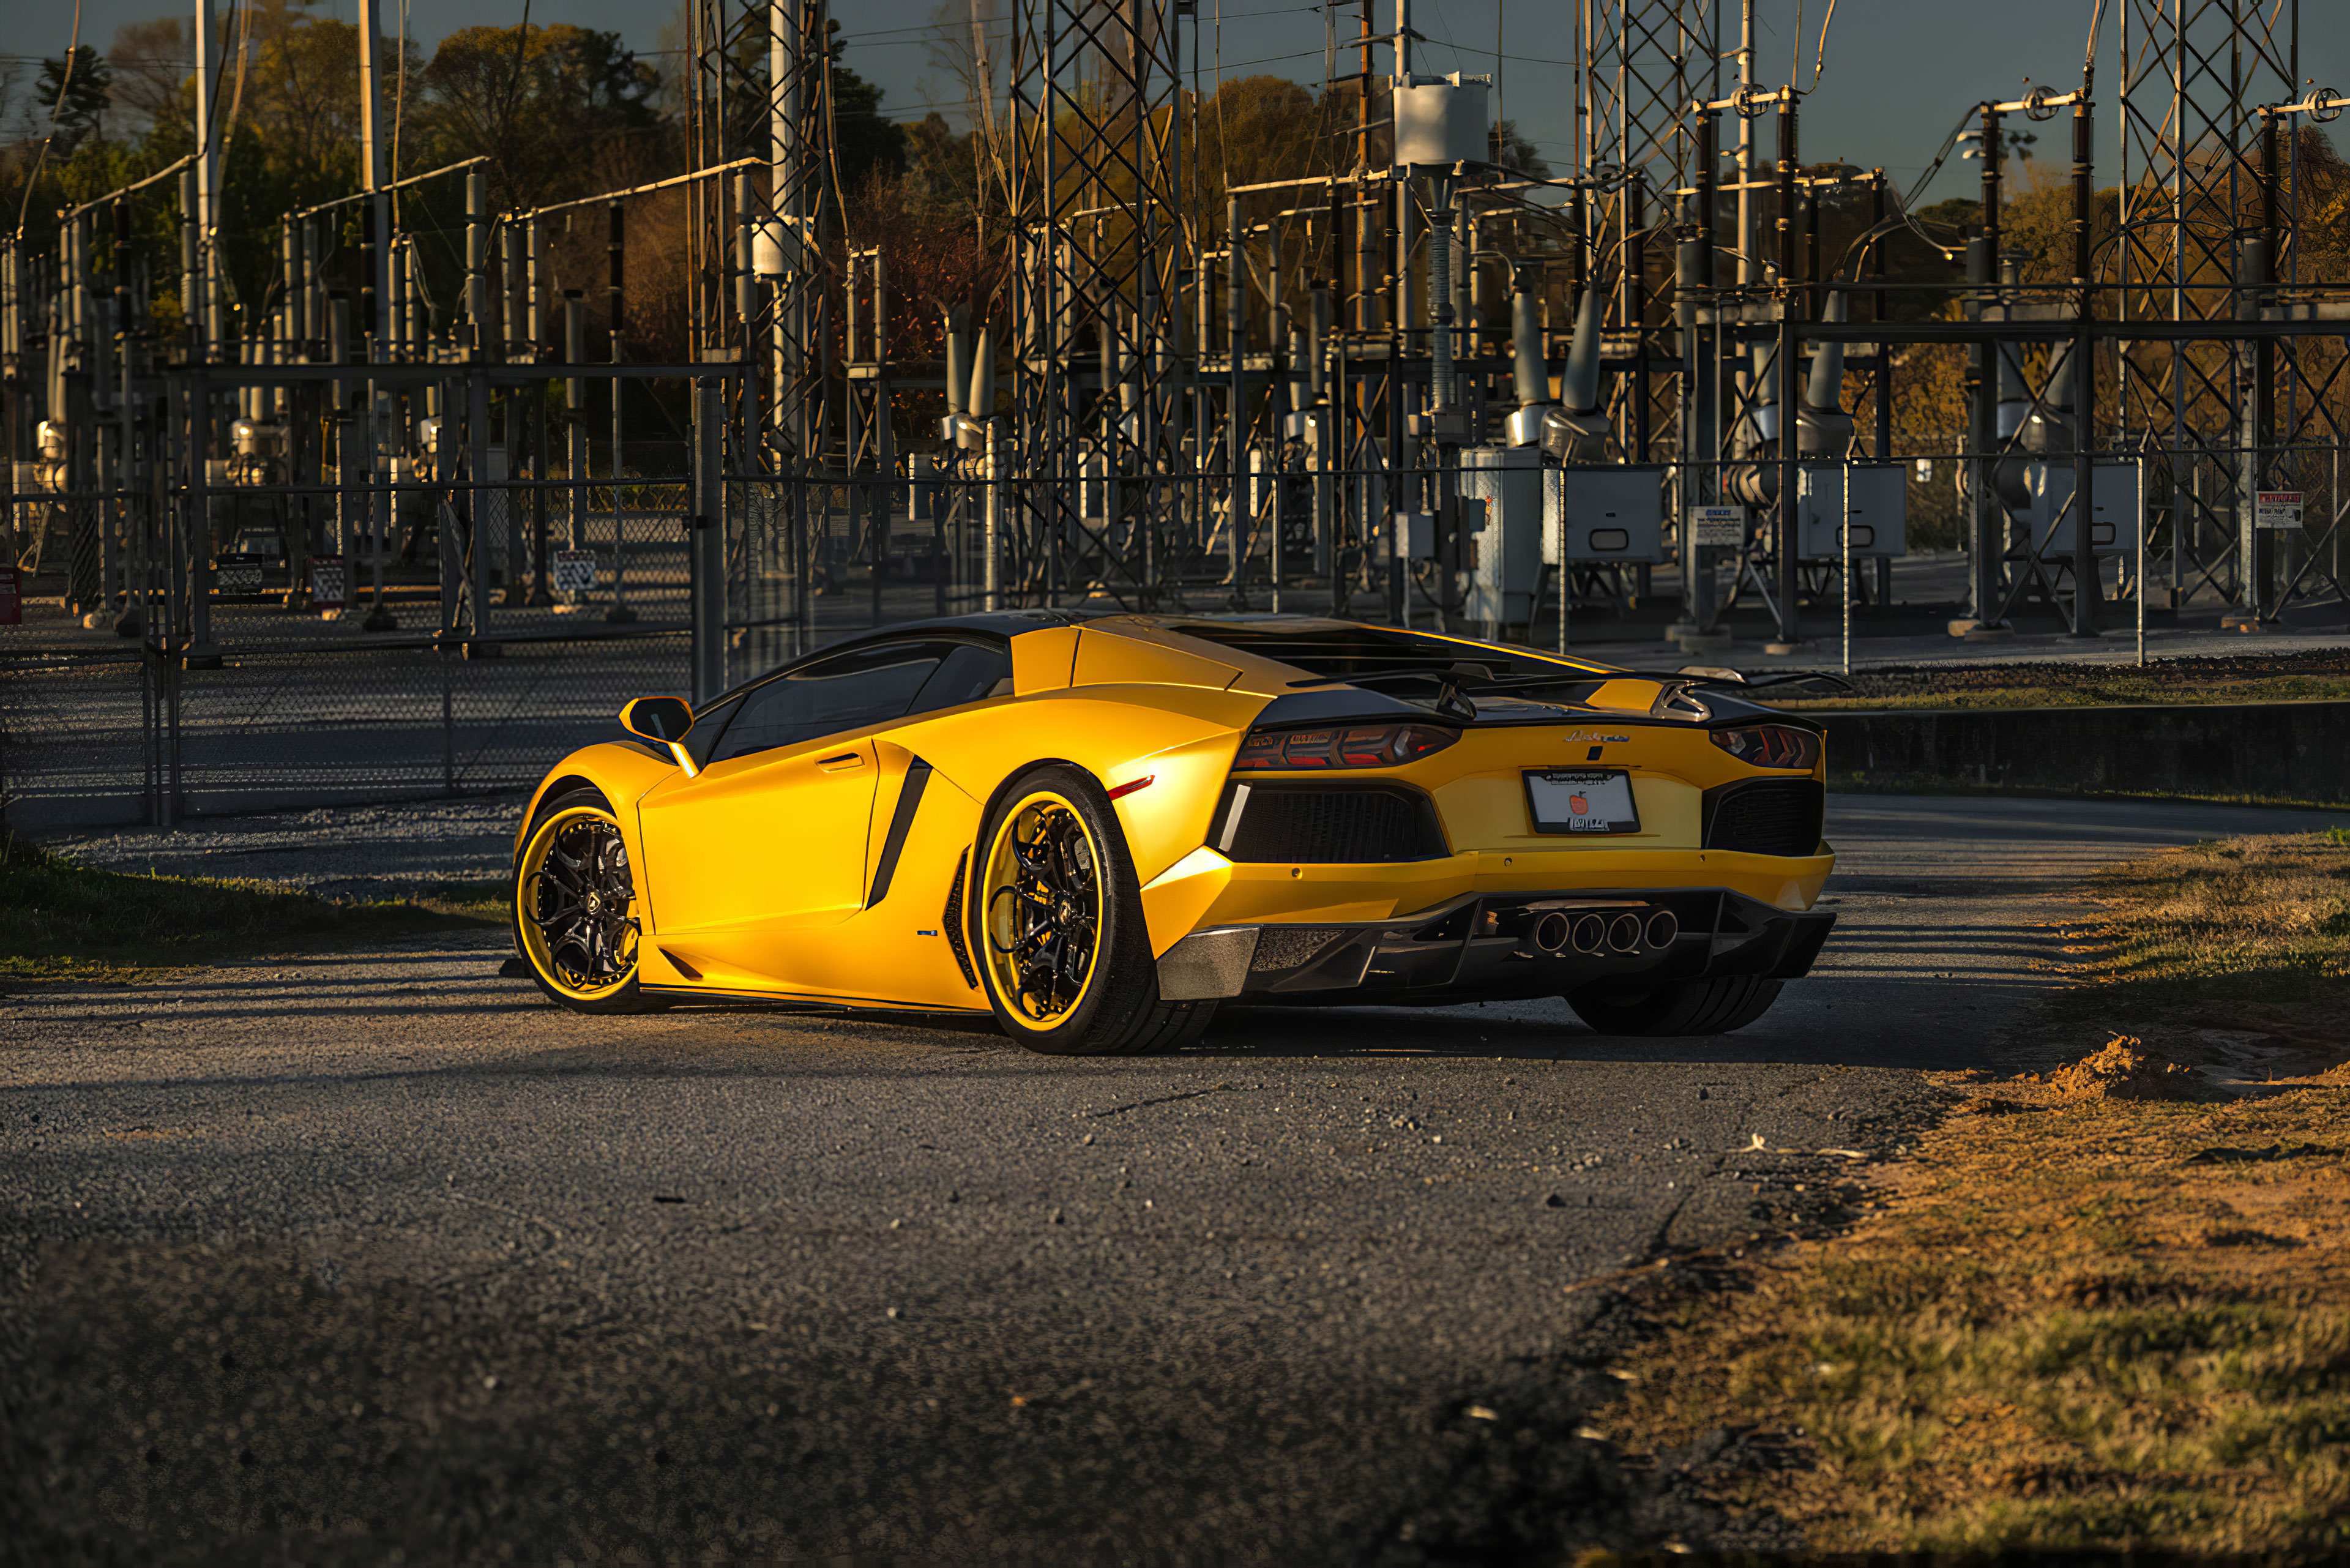 2020 Orange Lamborghini Aventador Sv Rear View, HD Cars, 4k Wallpapers